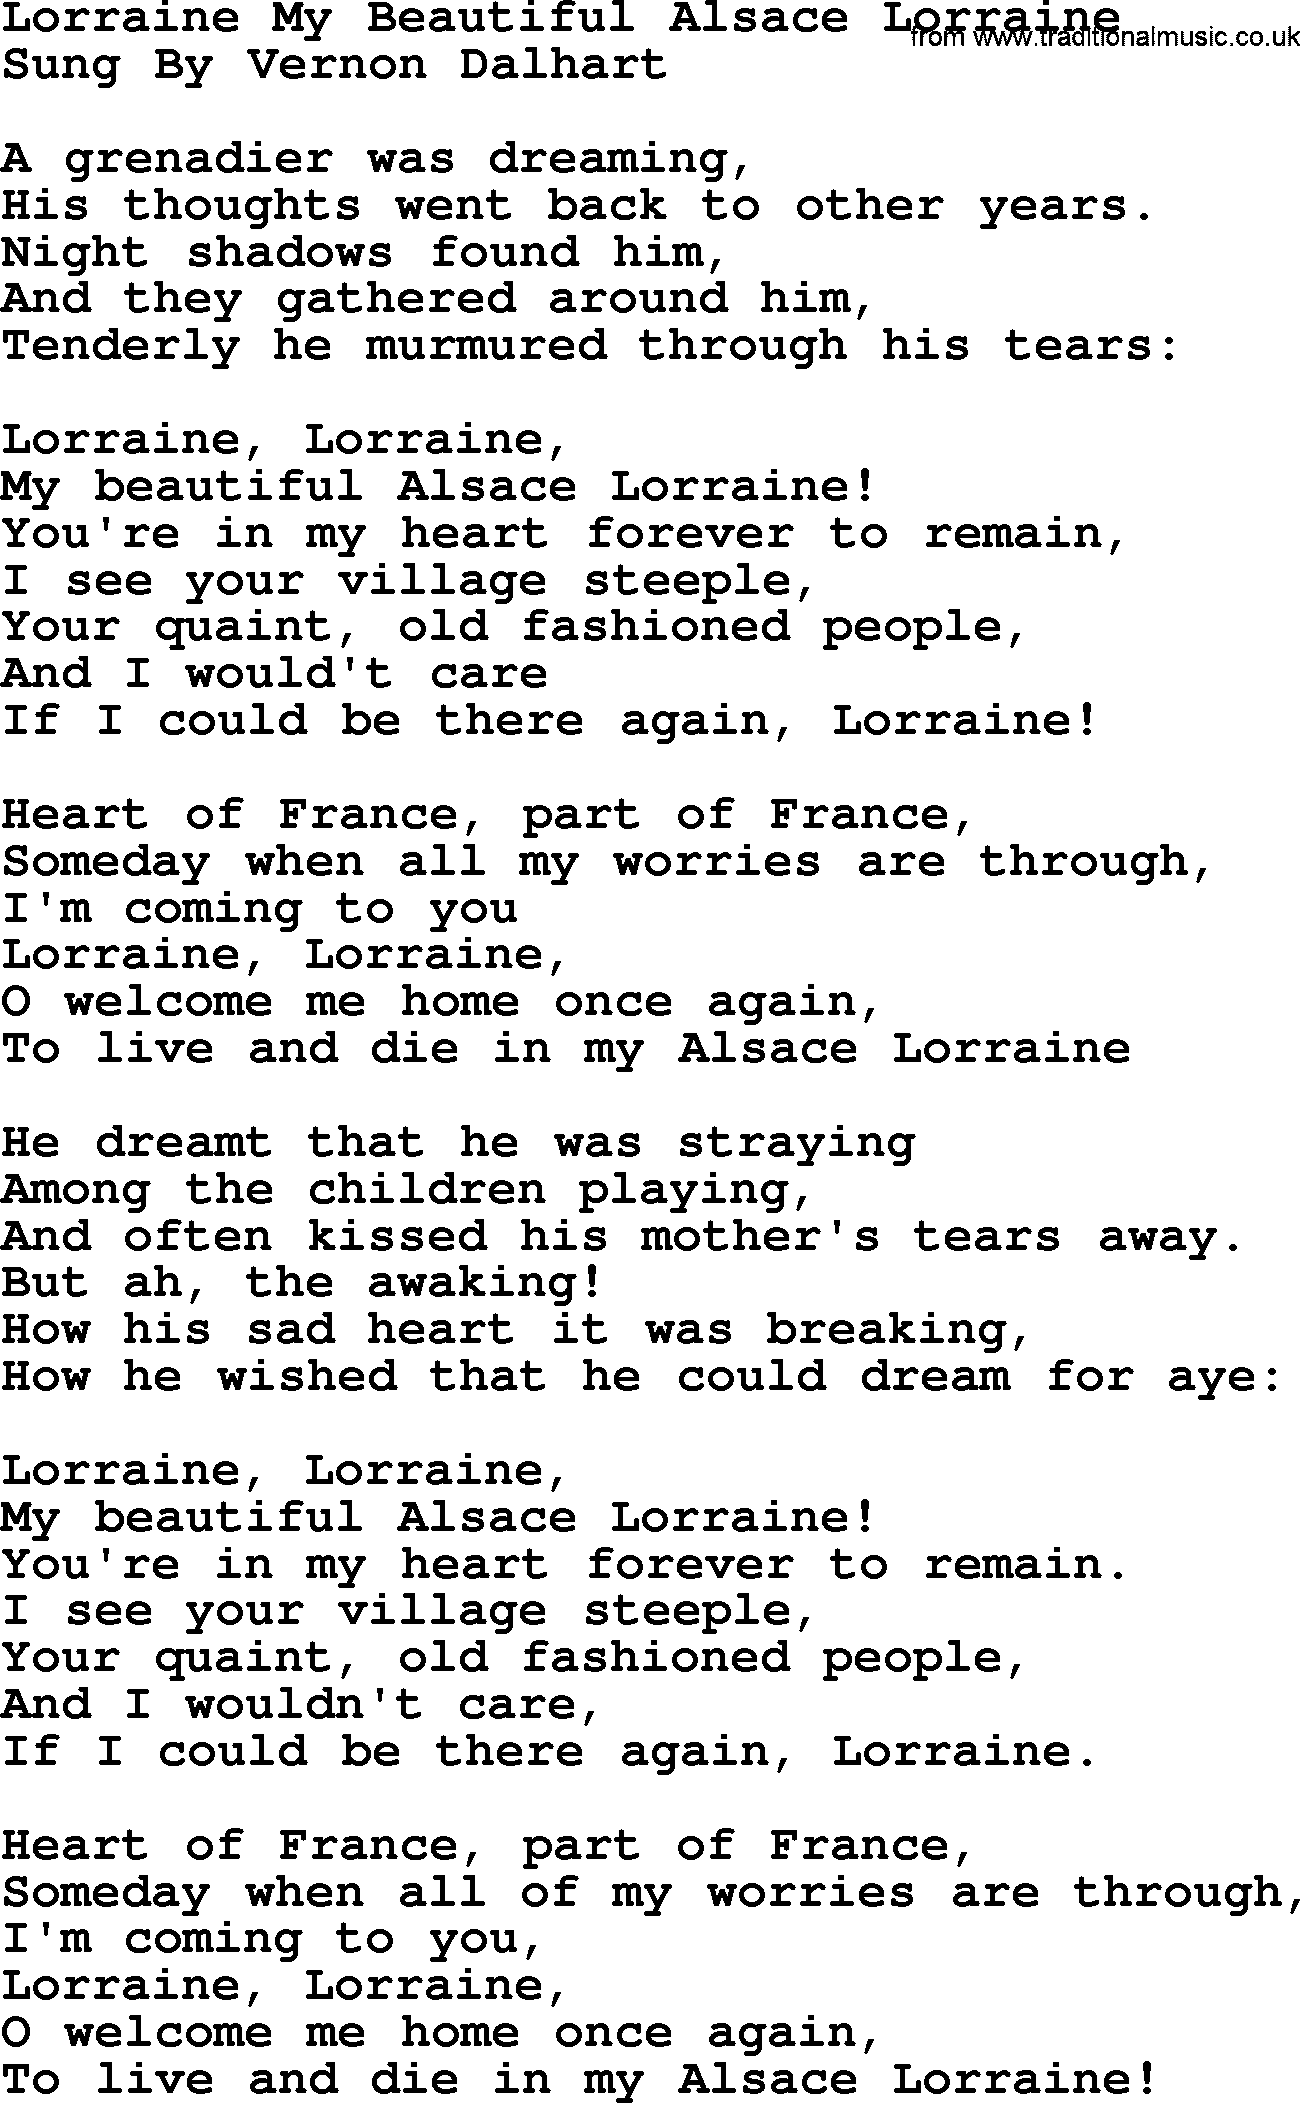 World War(WW1) One Song: Lorraine My Beautiful Alsace Lorraine, lyrics and PDF